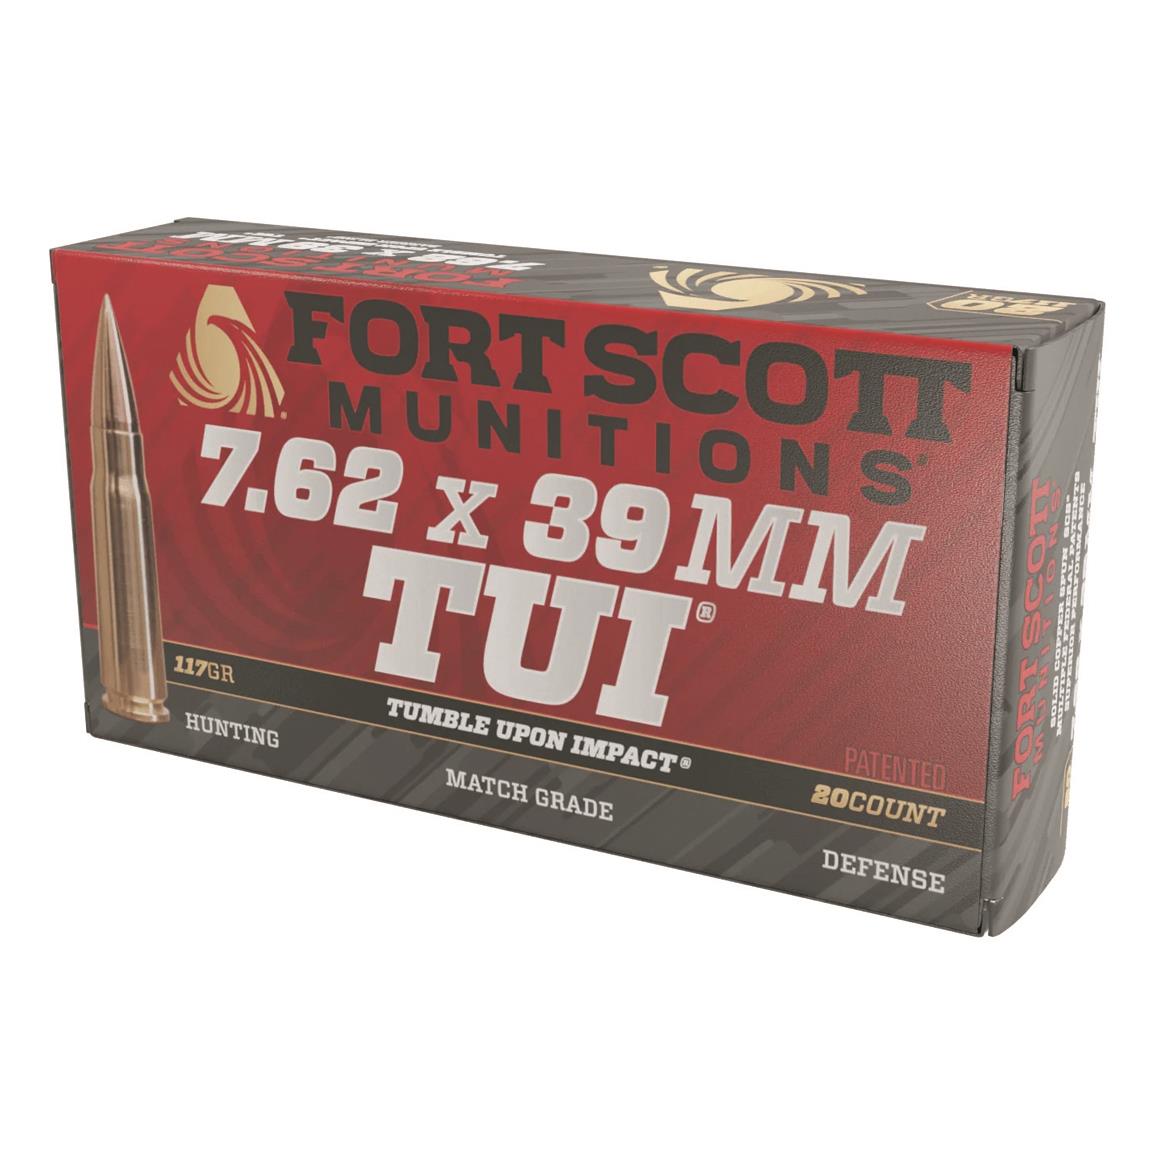 Fort Scott Tumble Upon Impact Ammo, 7.62x39mm, SCS, 117 Grain, 20 Rounds